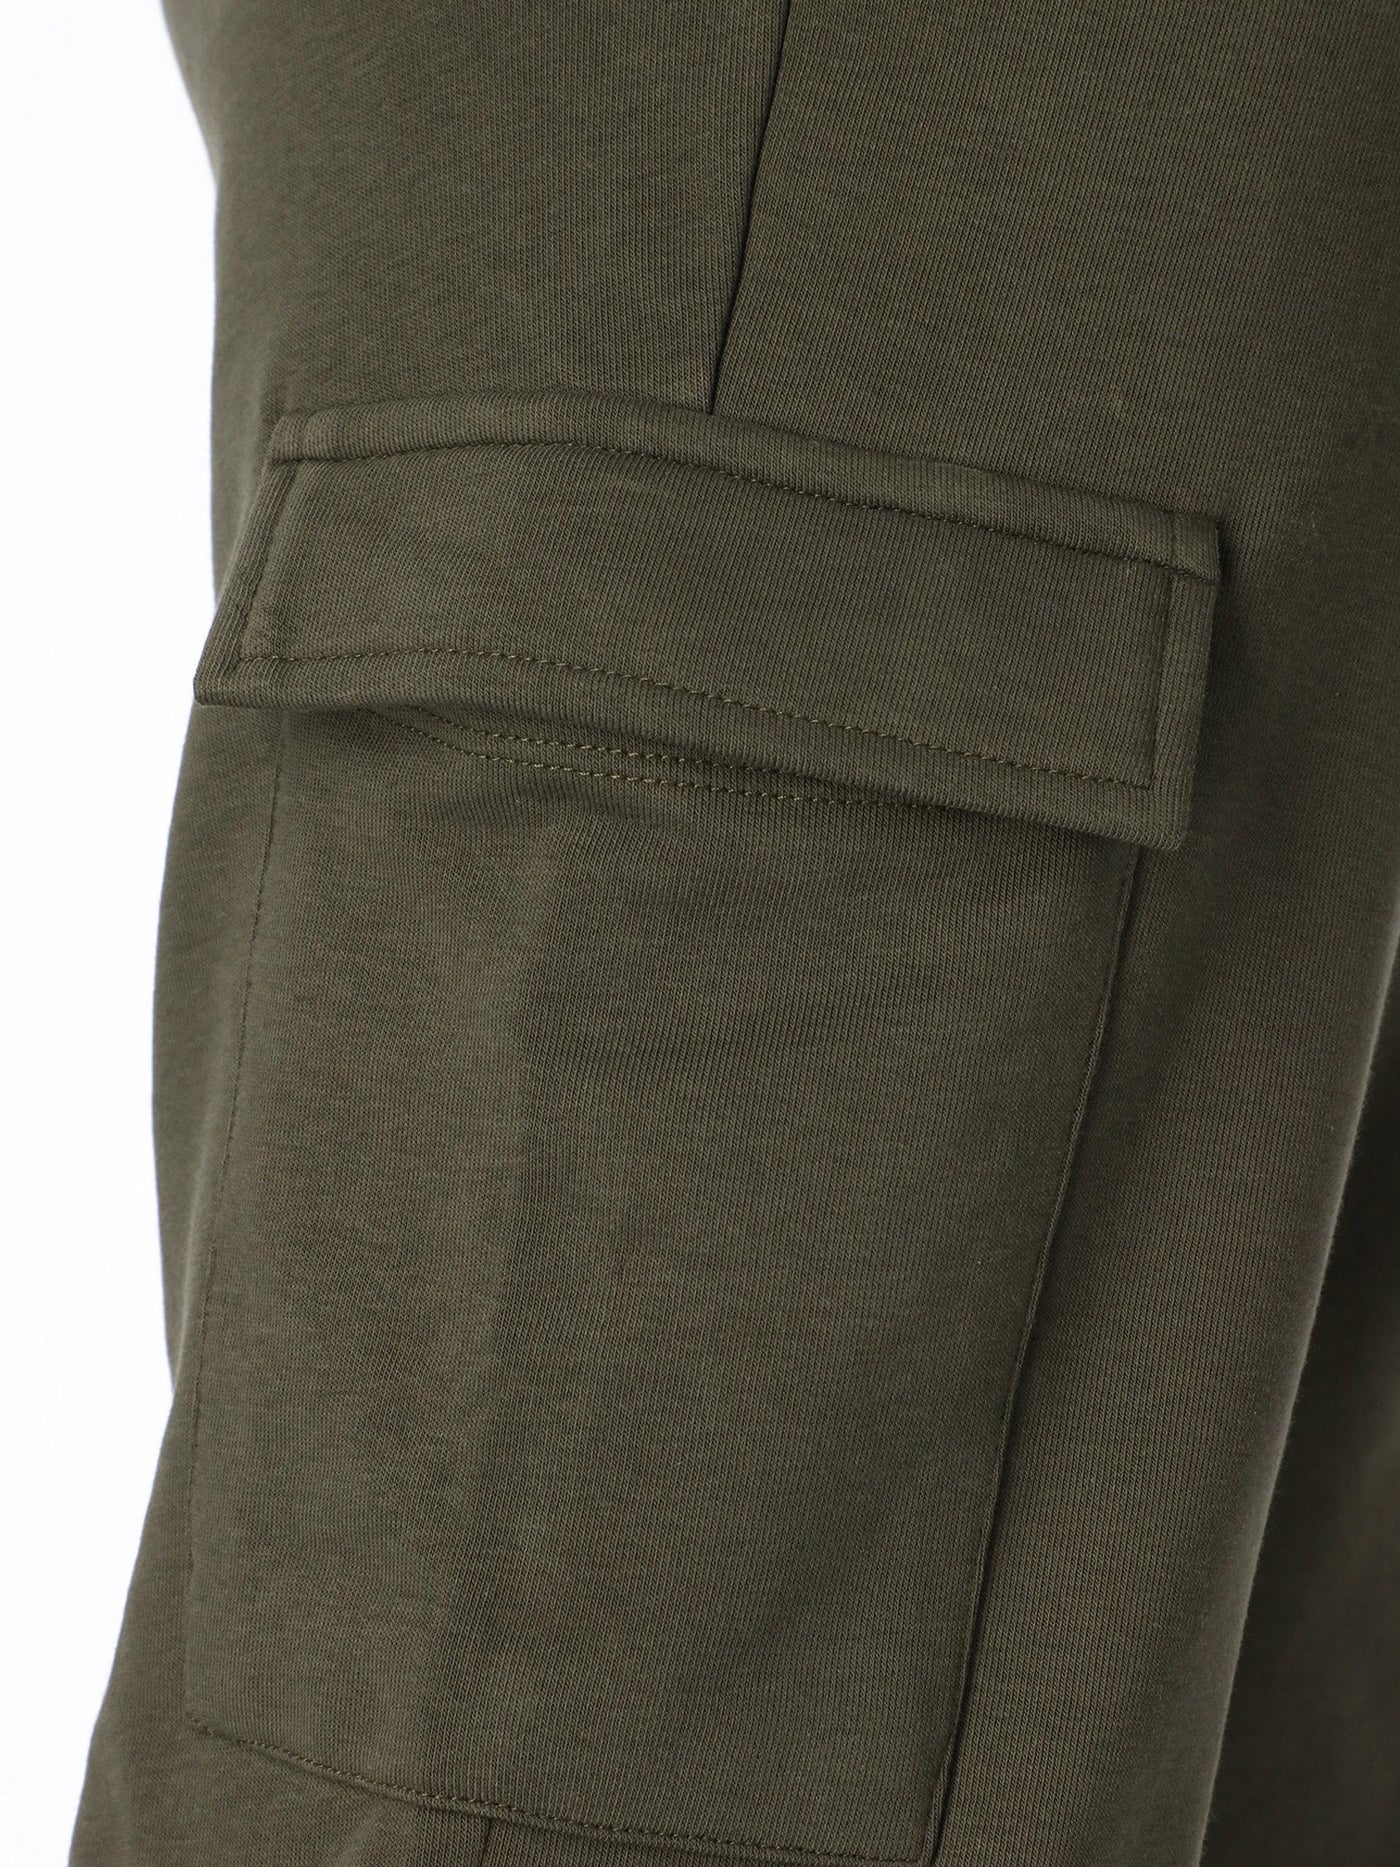 Jogger Pants - Side Pockets